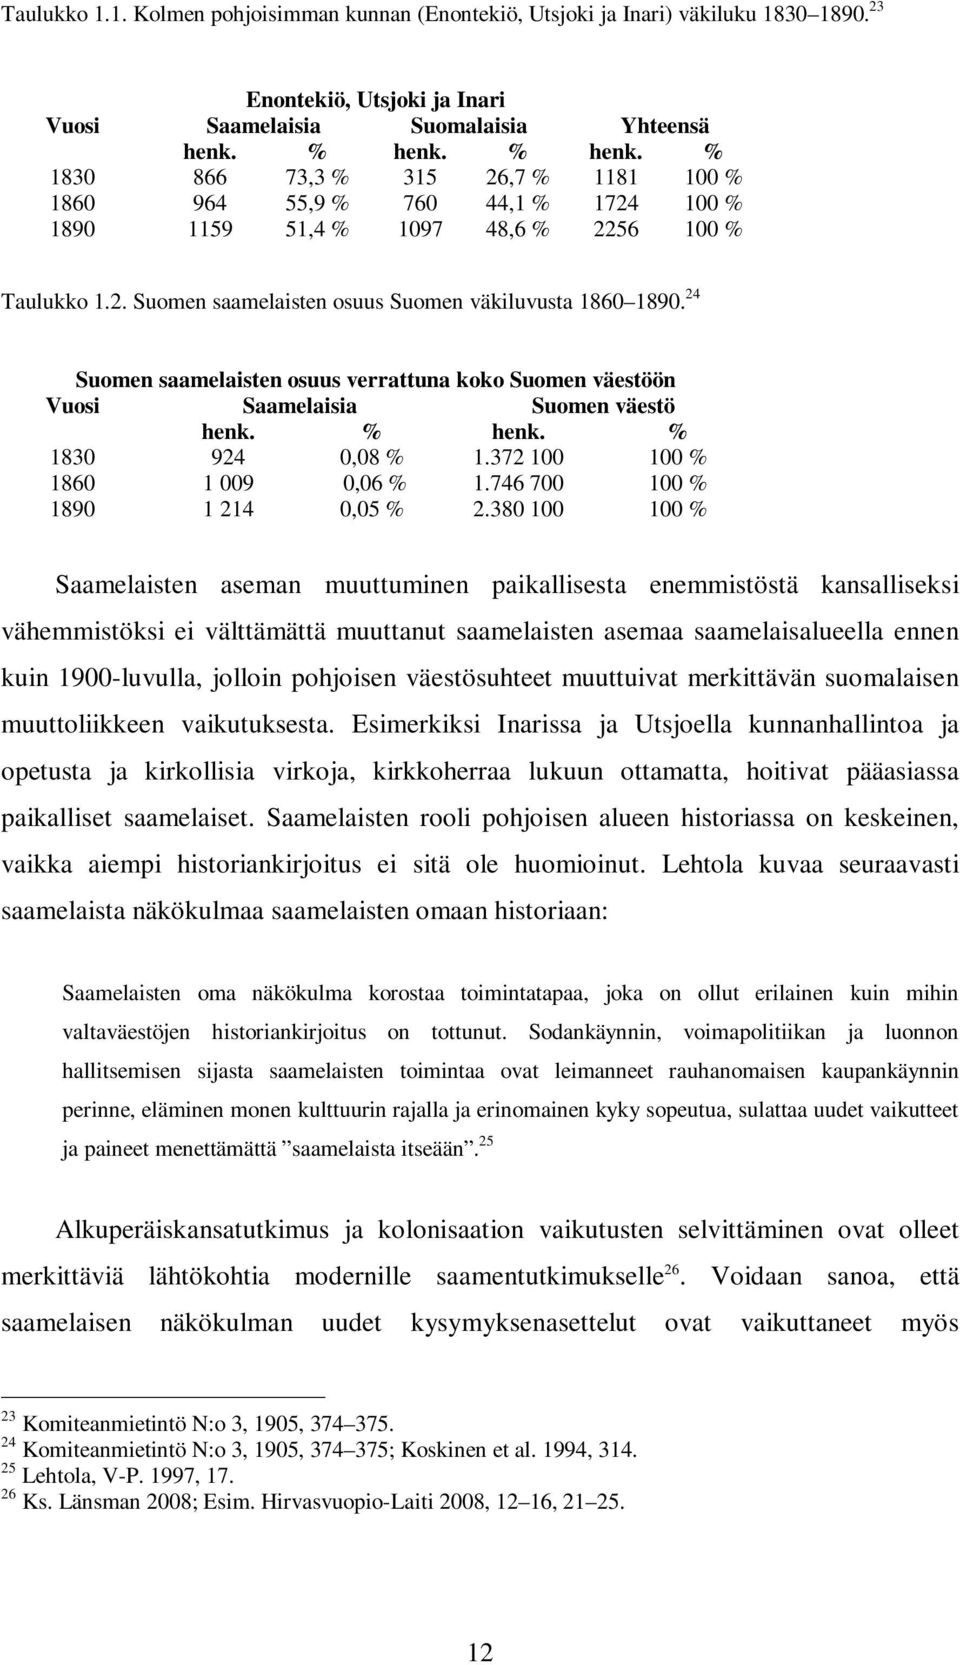 24 Suomen saamelaisten osuus verrattuna koko Suomen väestöön Vuosi Saamelaisia Suomen väestö henk. % henk. % 1830 924 0,08 % 1.372 100 100 % 1860 1 009 0,06 % 1.746 700 100 % 1890 1 214 0,05 % 2.